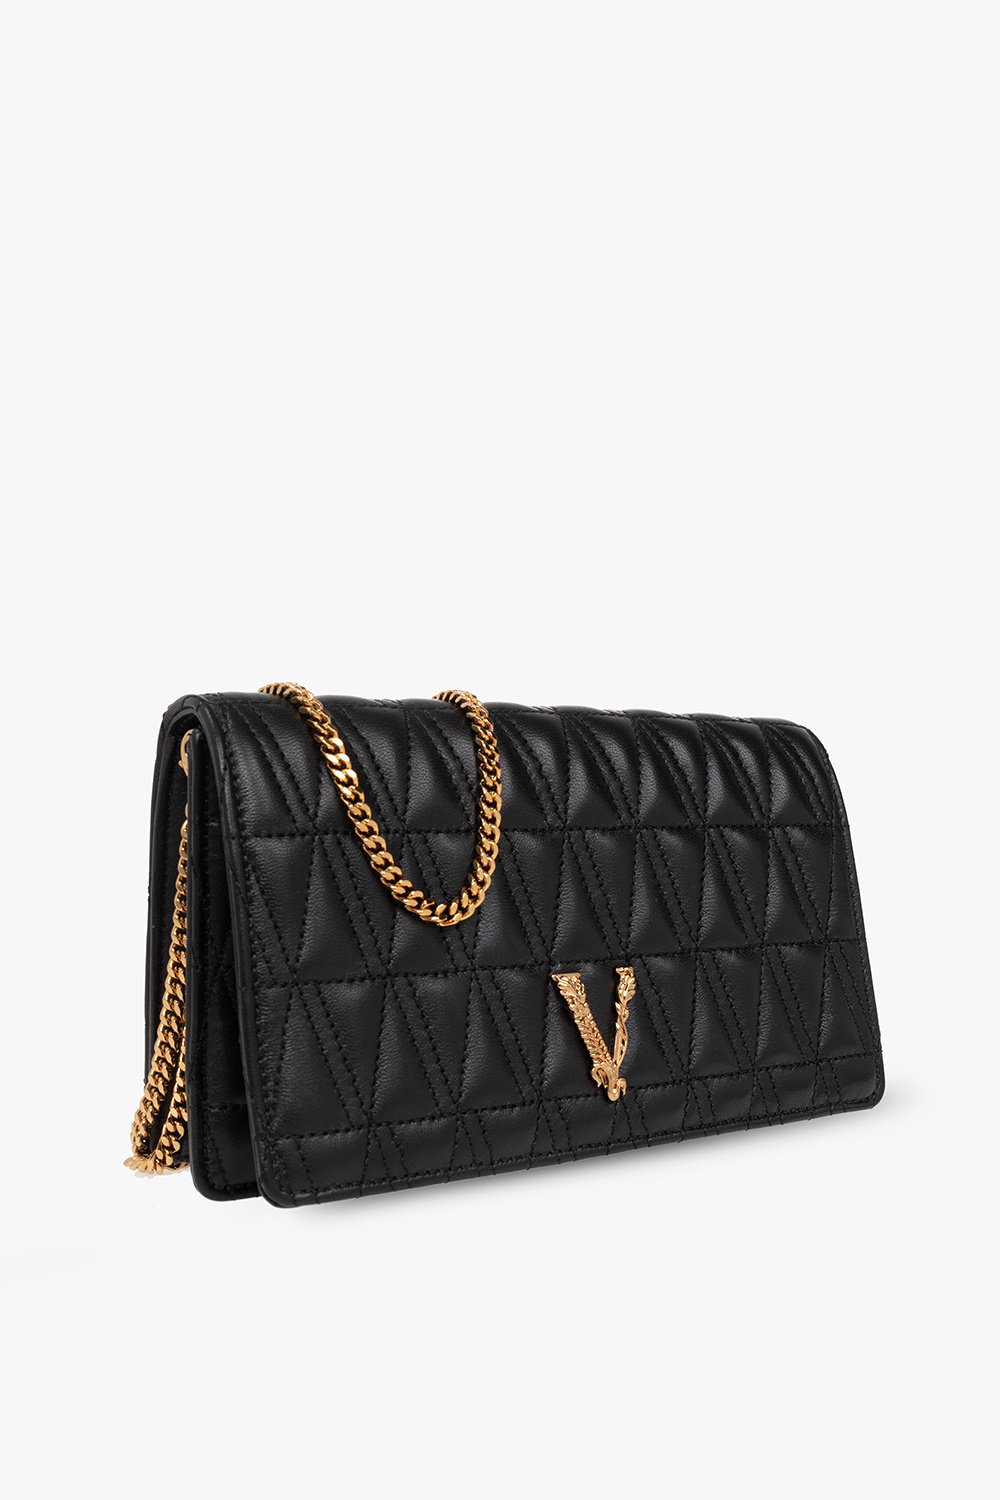 Versace Virtus Black Saffiano Leather Tote